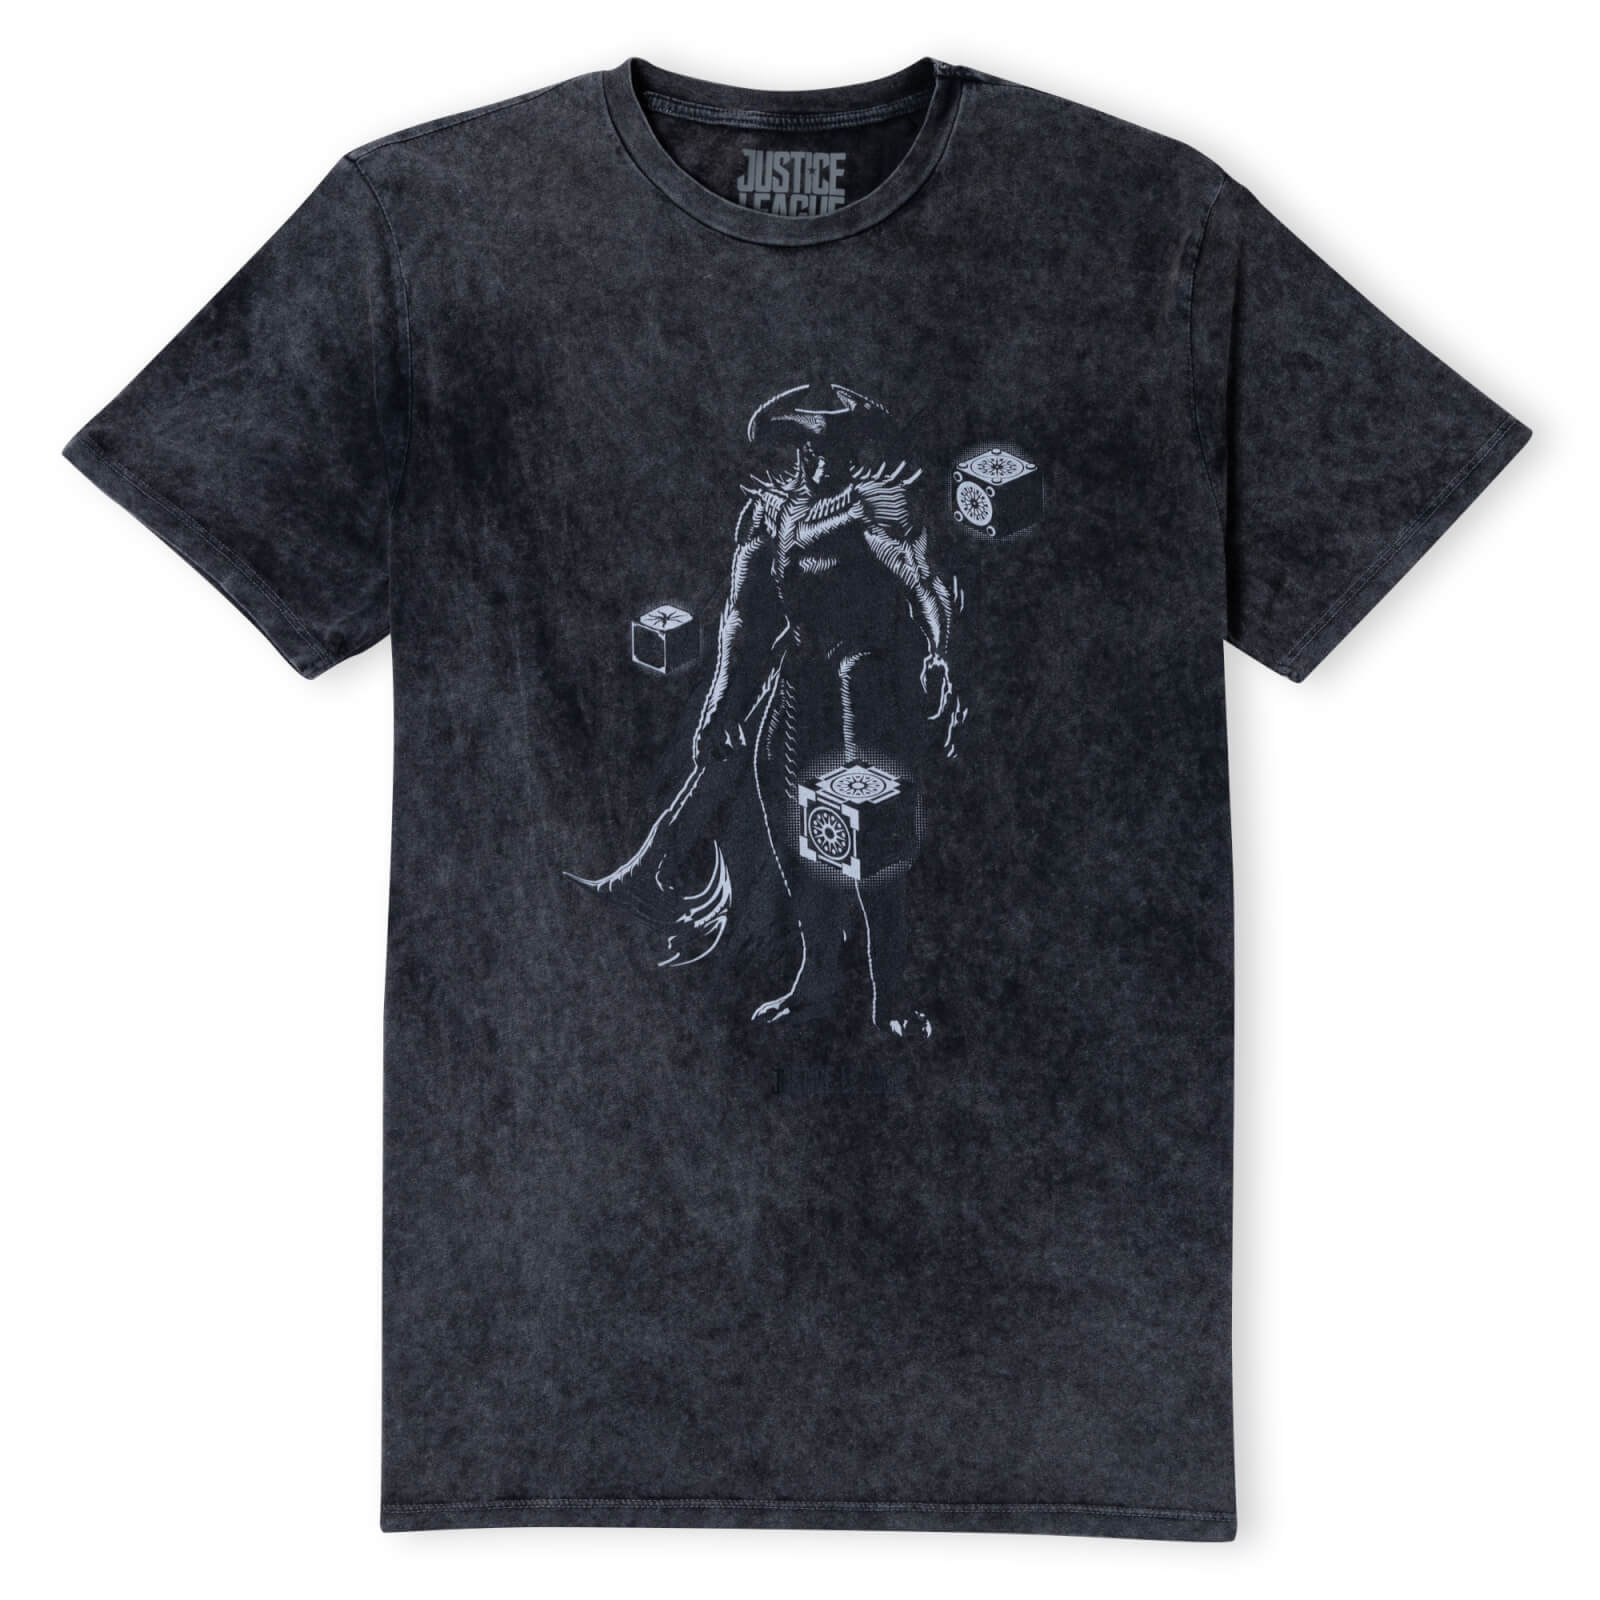 Justice League Steppenwolf Unisex T-Shirt - Black Acid Wash - S - Black Acid Wash